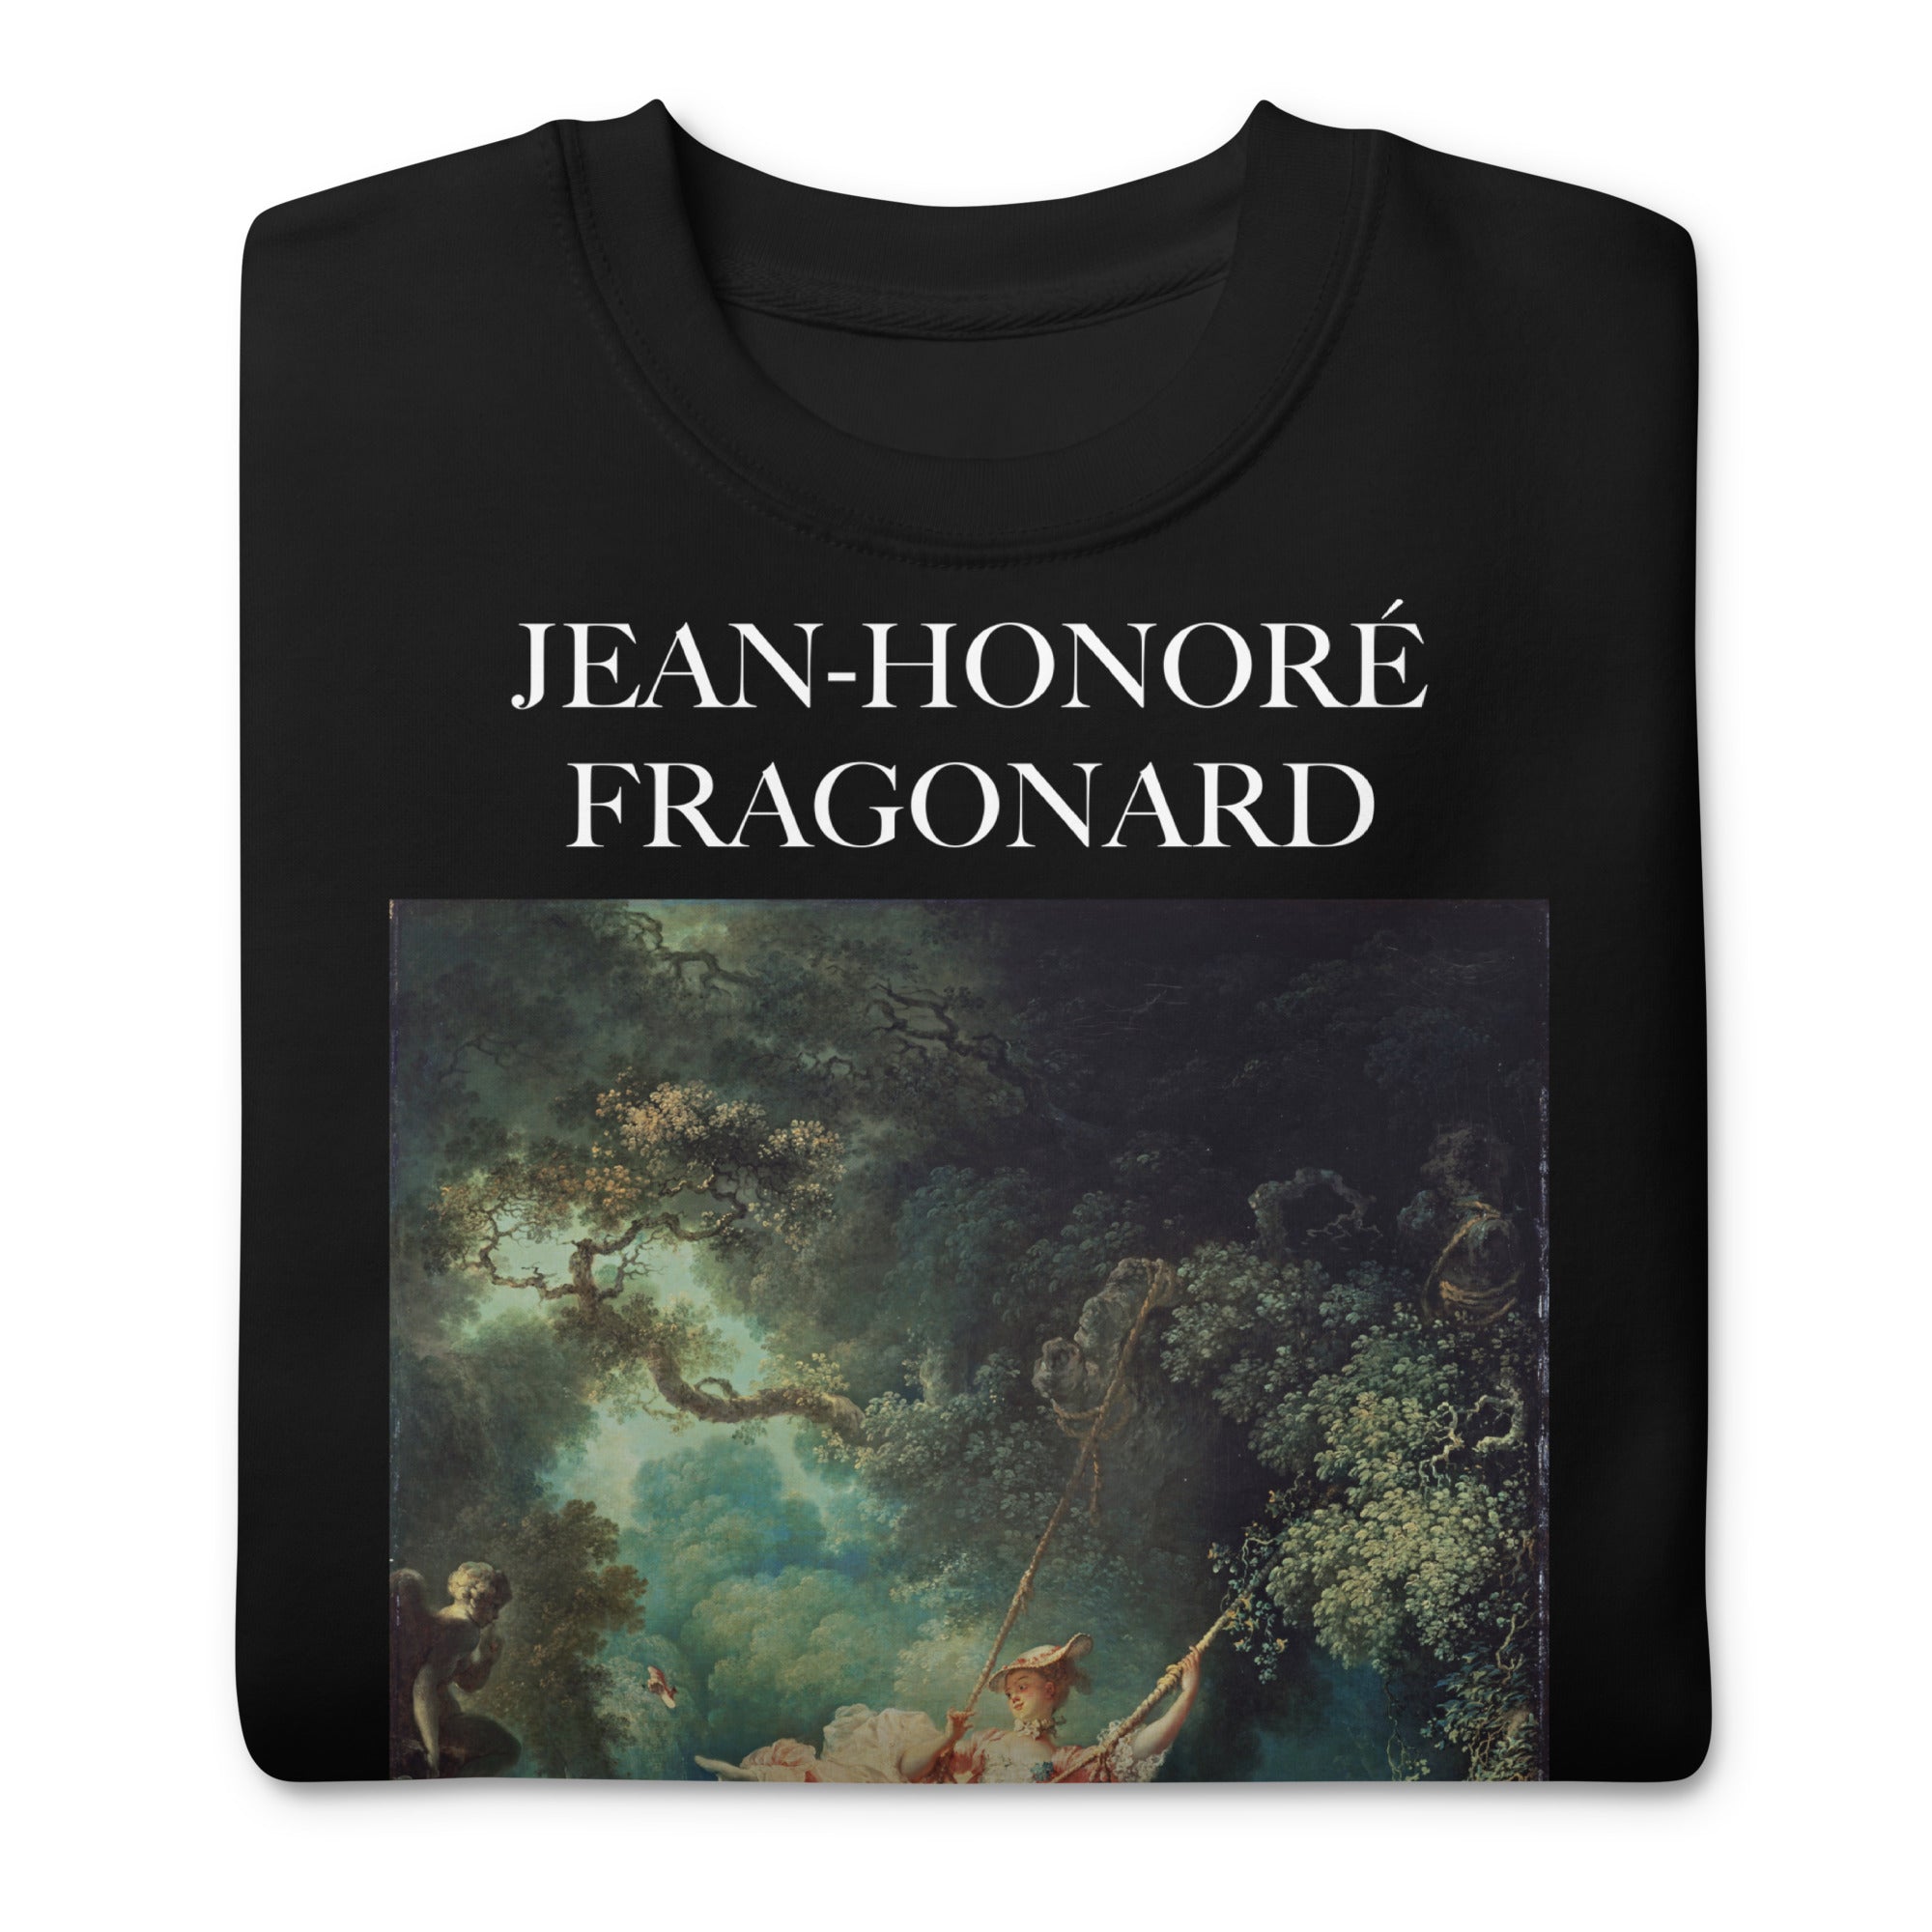 Jean-Honoré Fragonard 'The Swing' Famous Painting Sweatshirt | Unisex Premium Sweatshirt